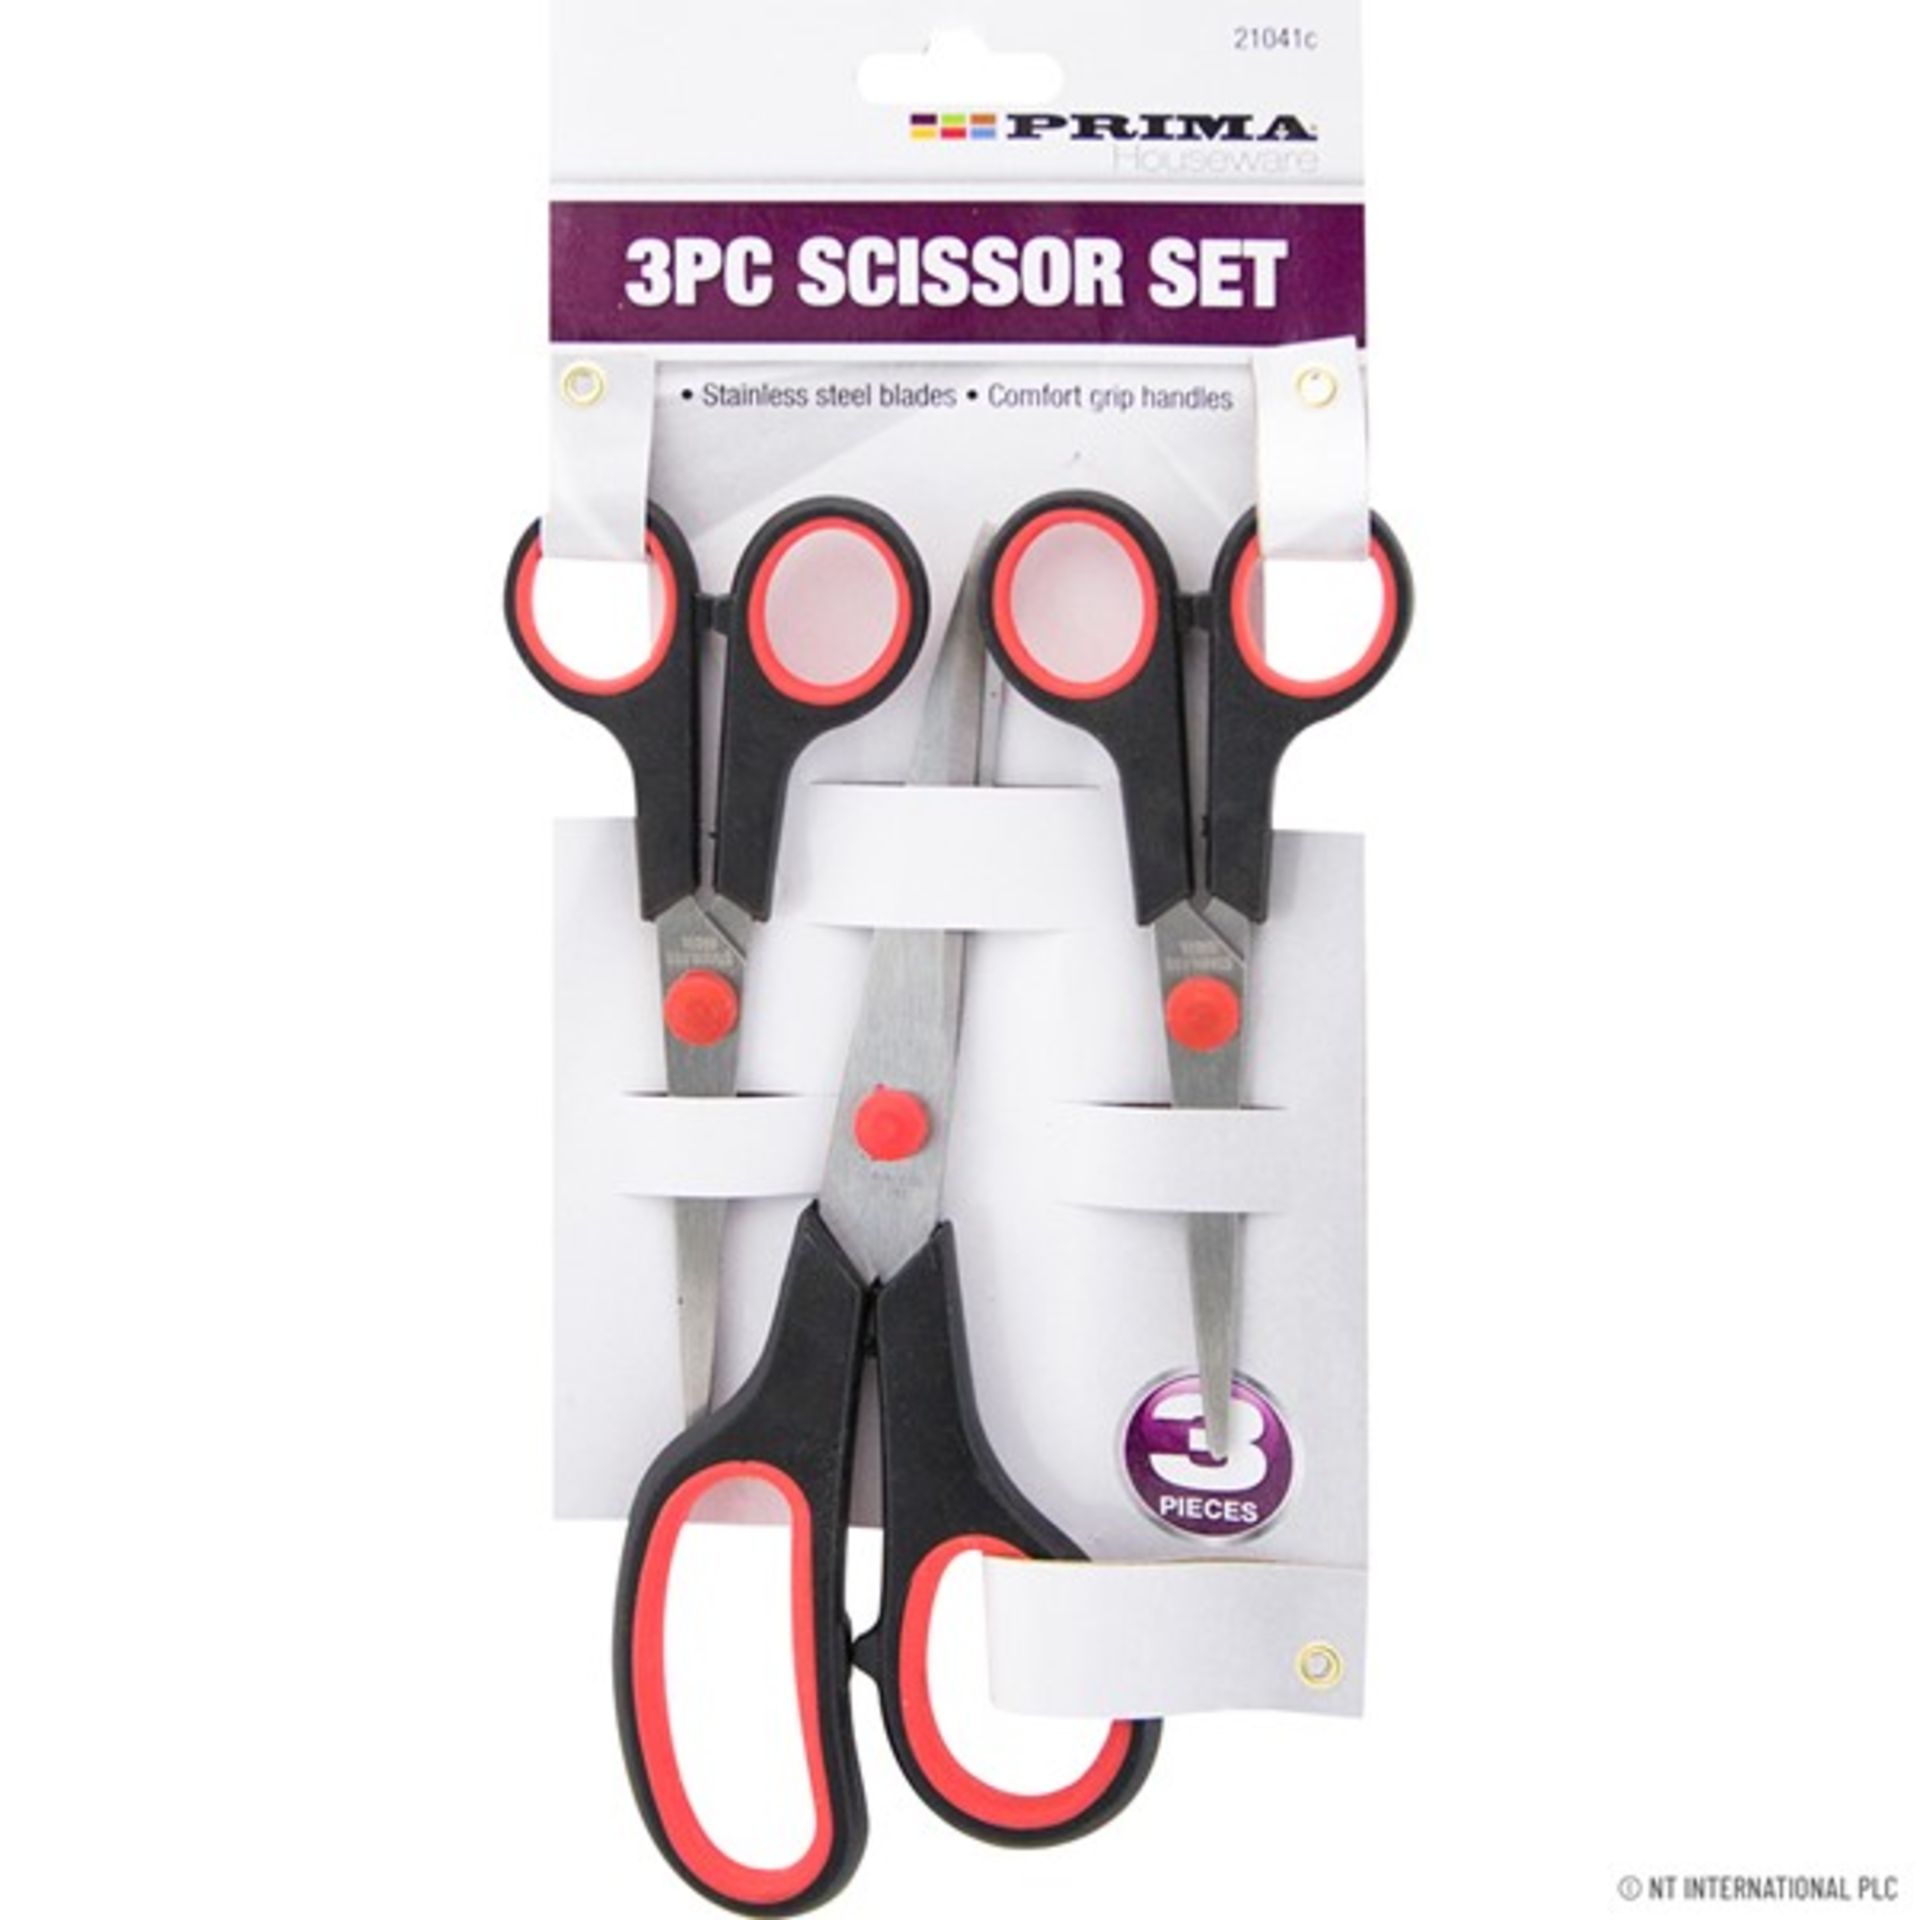 New 3pc Scissor Set